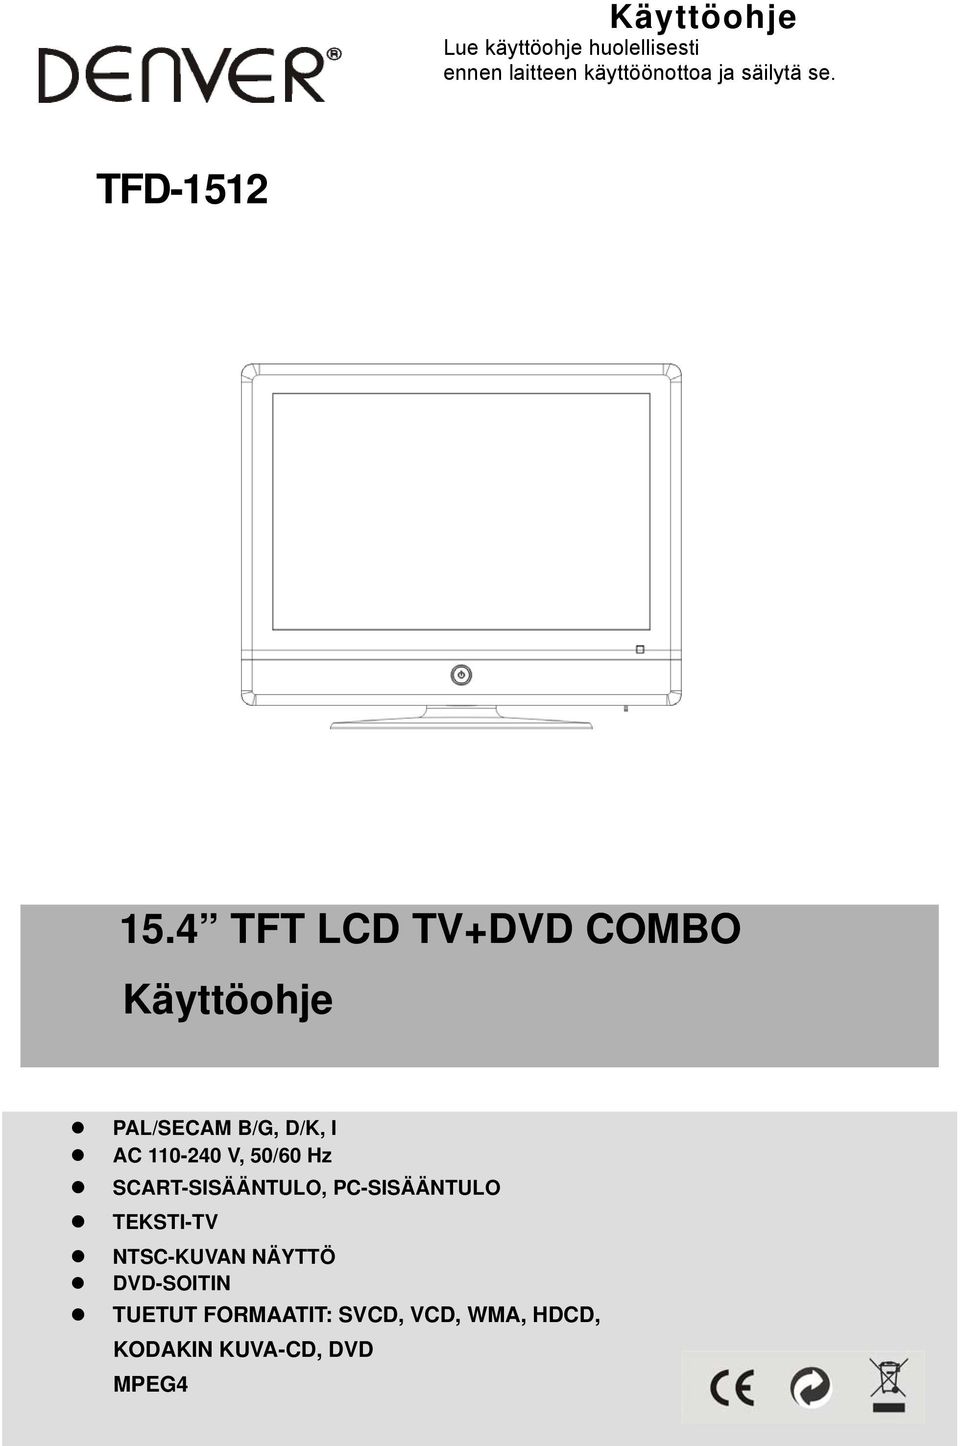 4 TFT LCD TV+DVD COMBO Käyttöohje PAL/SECAM B/G, D/K, I AC 110-240 V, 50/60